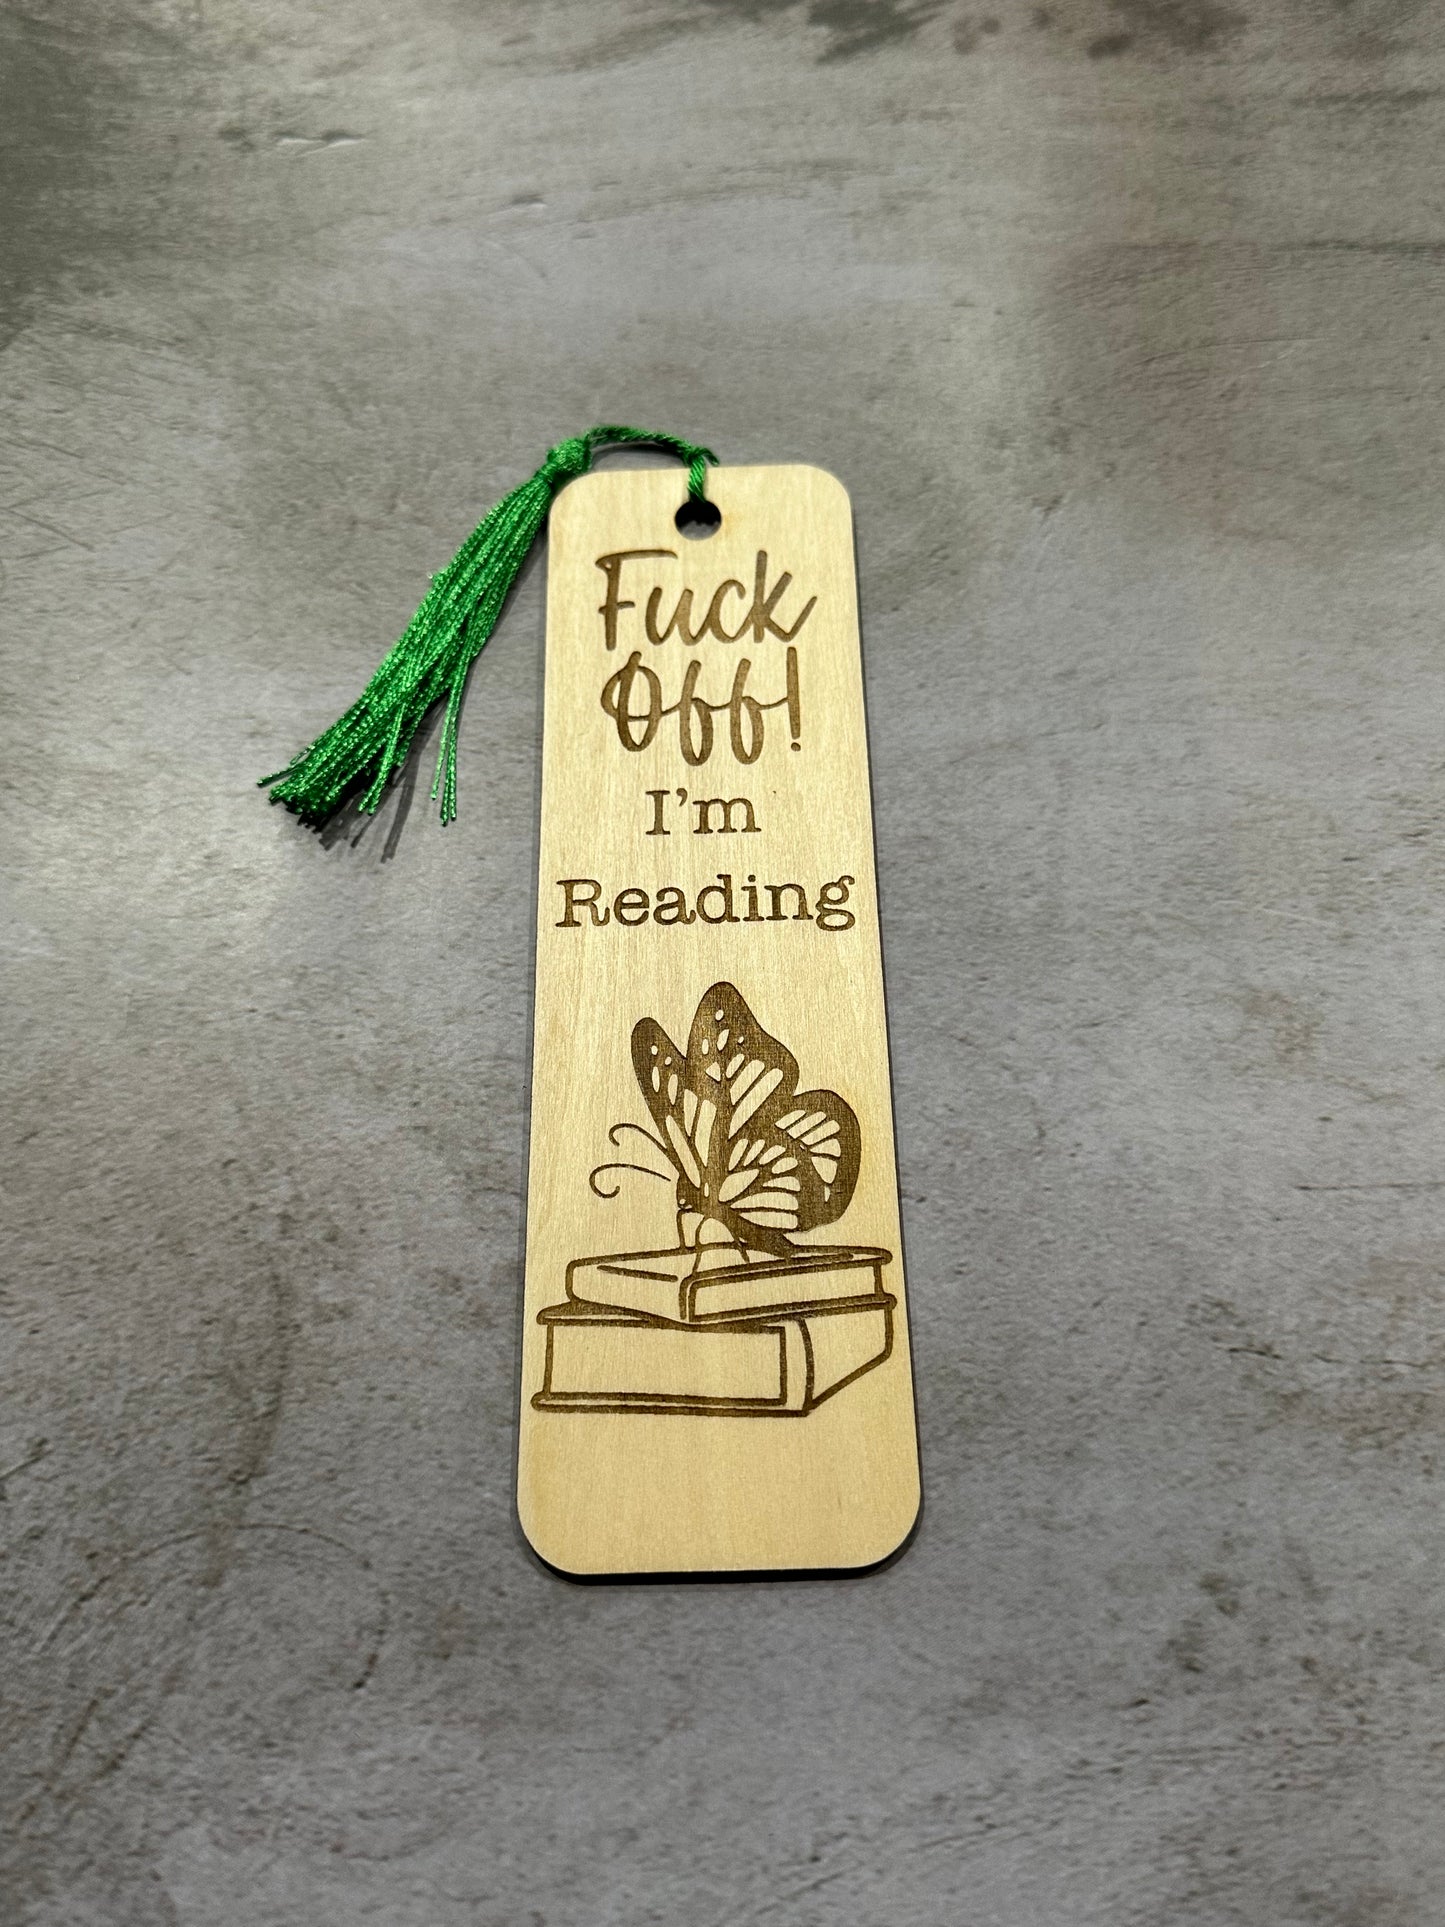 Fuck off!! I'm reading